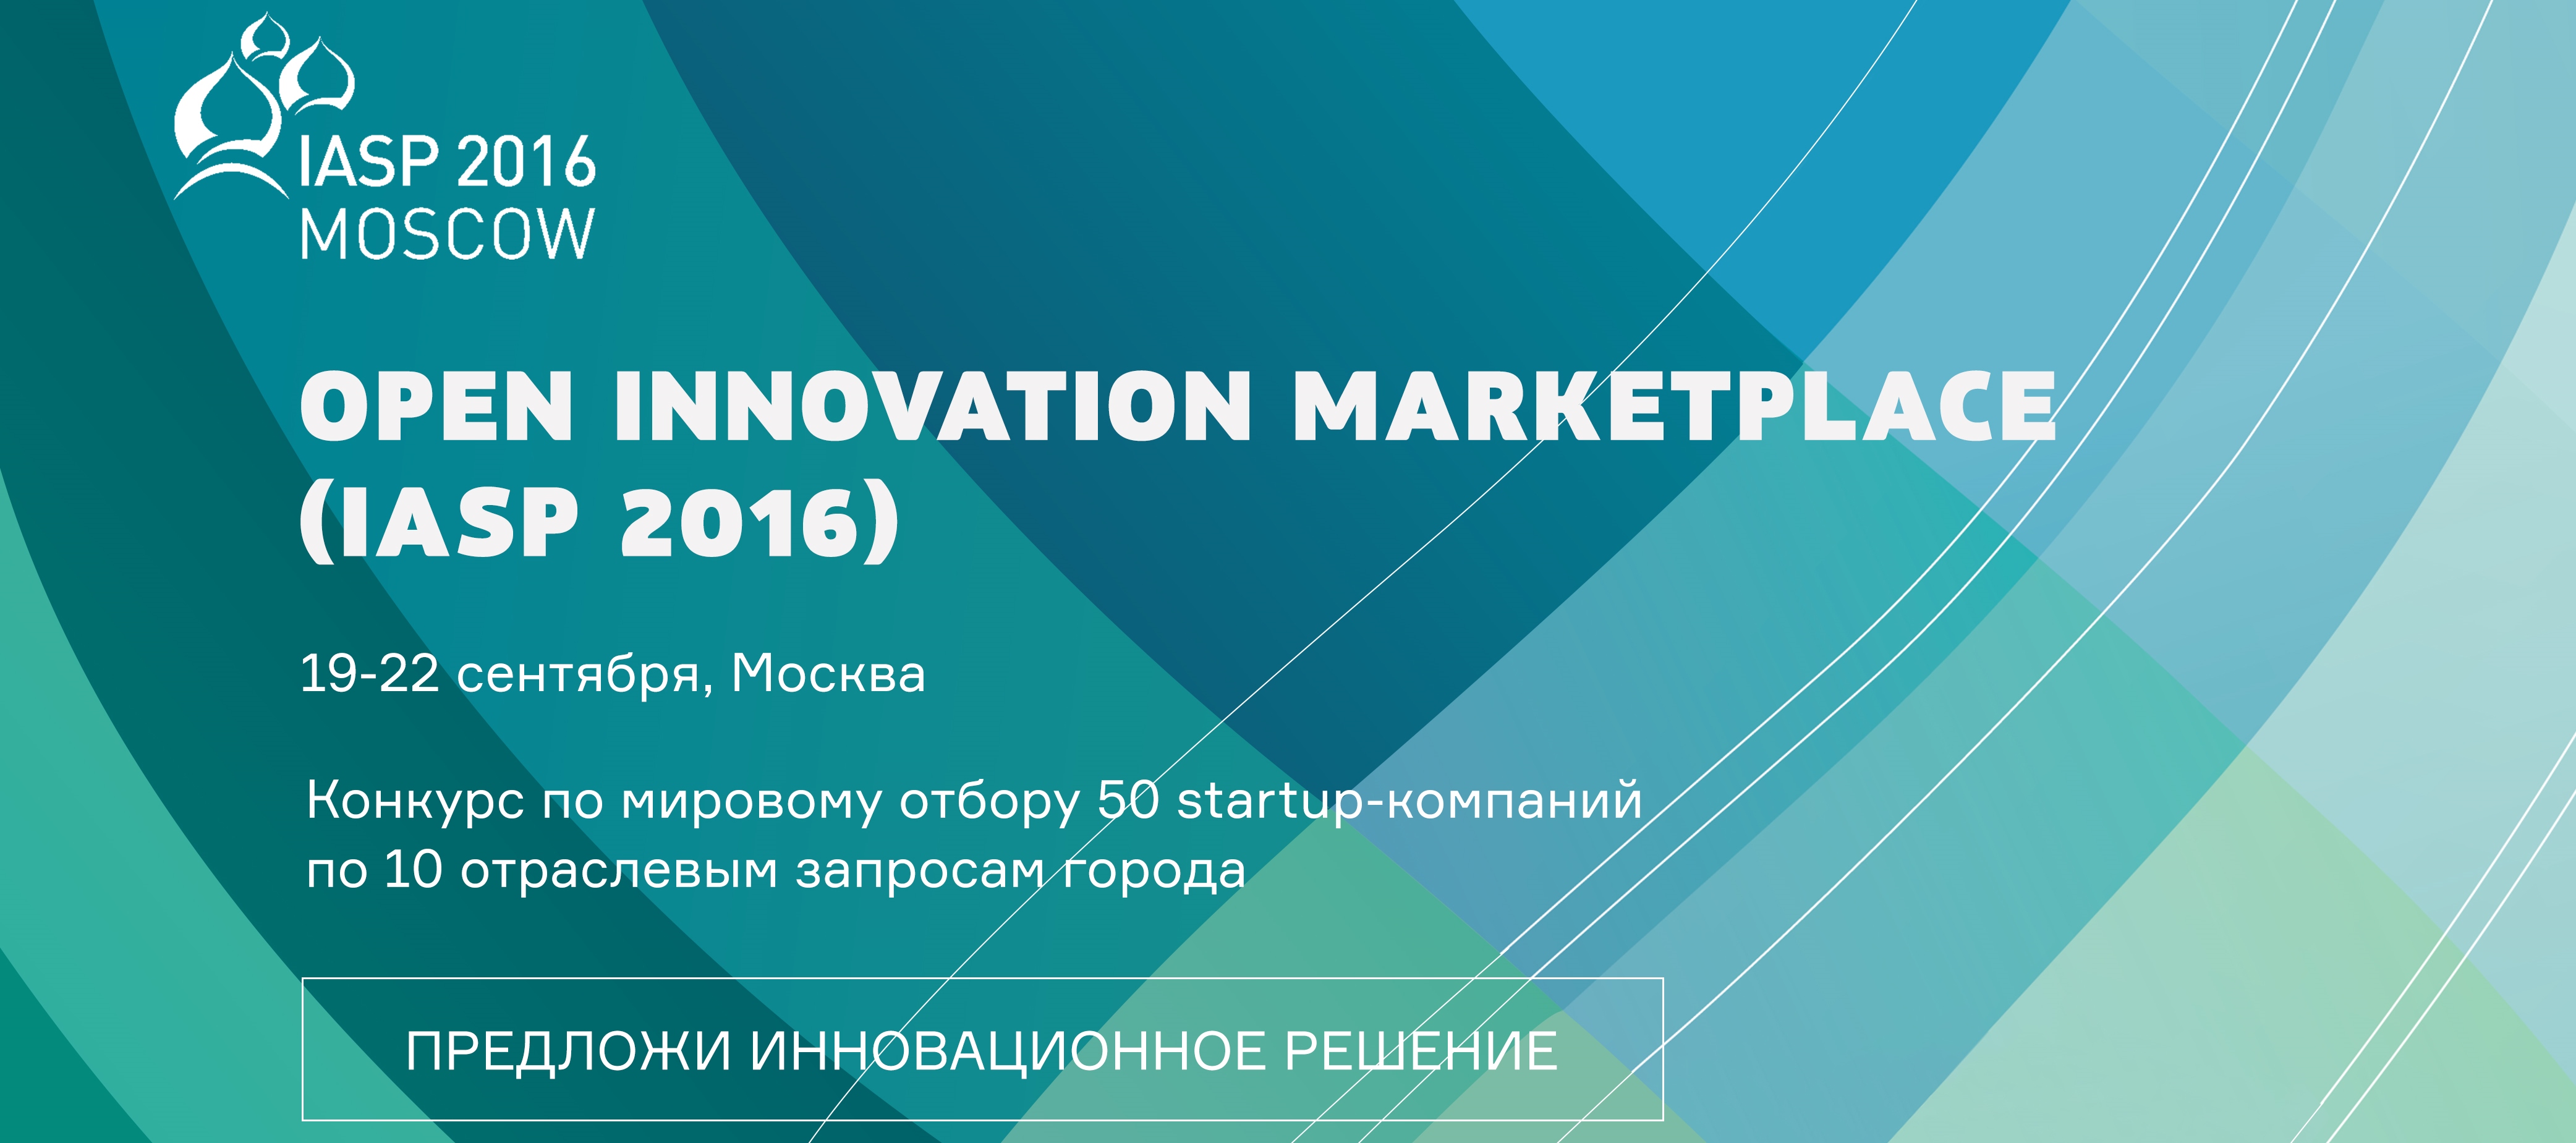 Open innovation marketplace